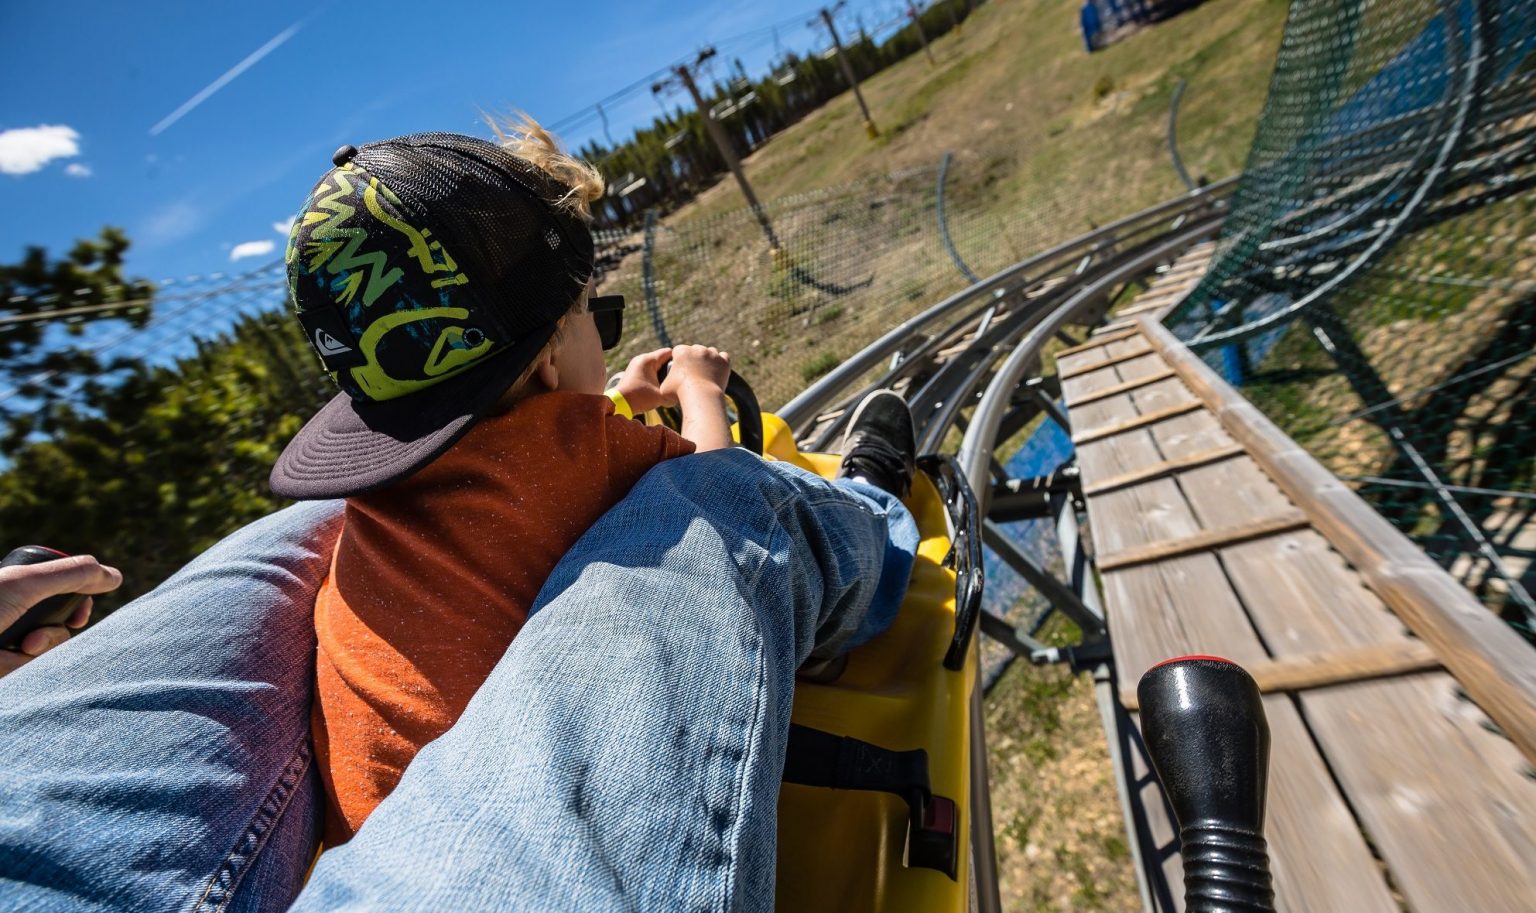 Breck GoldRunner Coaster Ride Along